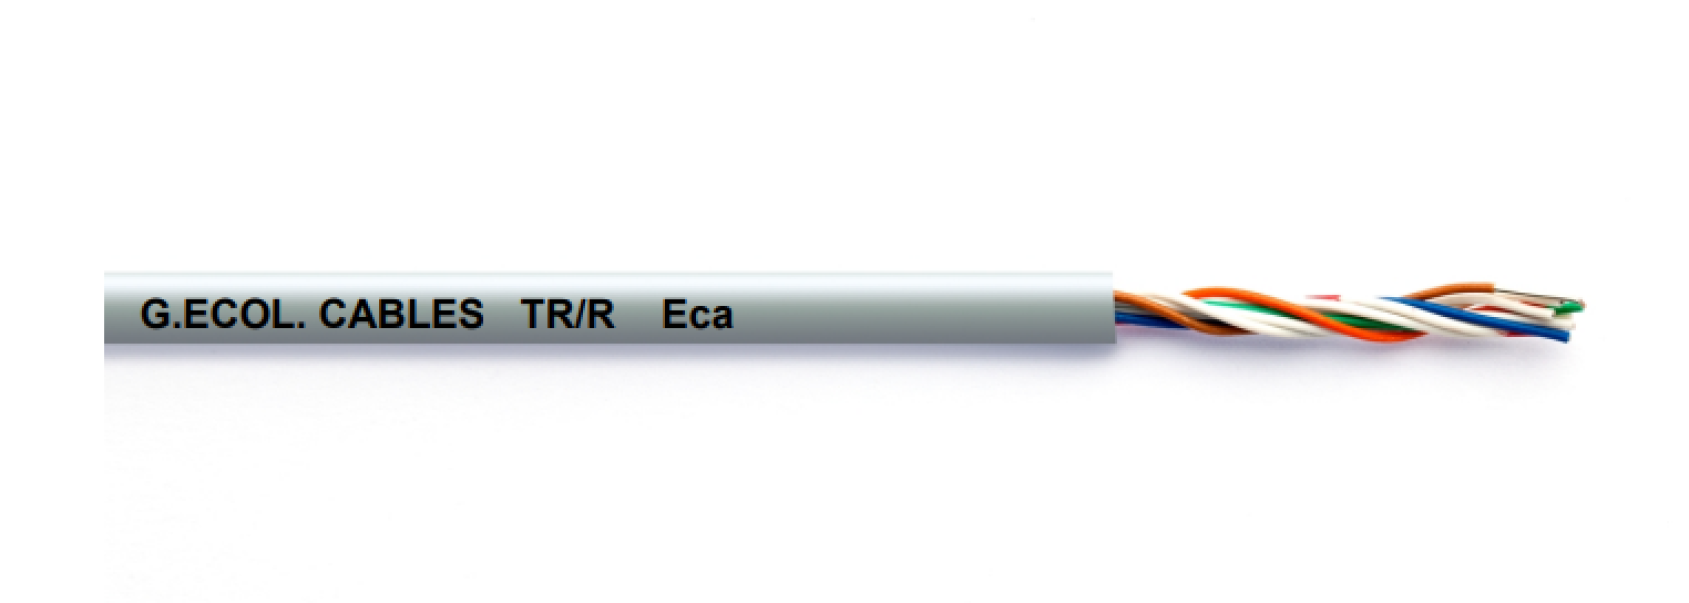 Cavo telefonico G.Ecol.Cables diametro 0.6mm da 250m grigio - TRR-3C/B250 01